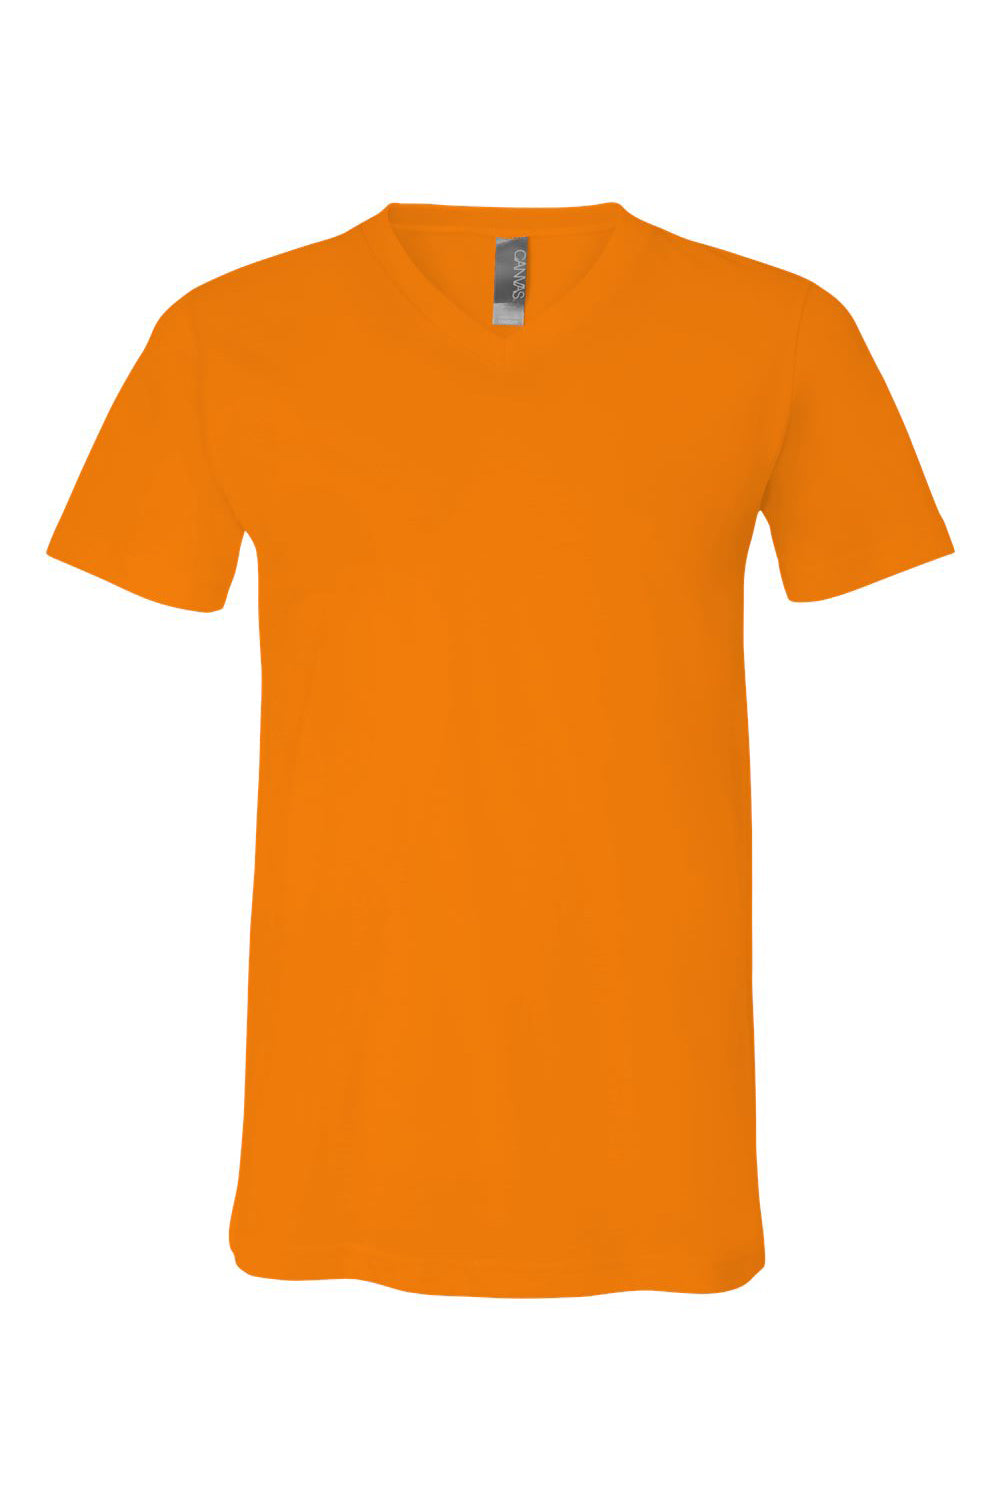 Bella + Canvas BC3005/3005/3655C Mens Jersey Short Sleeve V-Neck T-Shirt Orange Flat Front